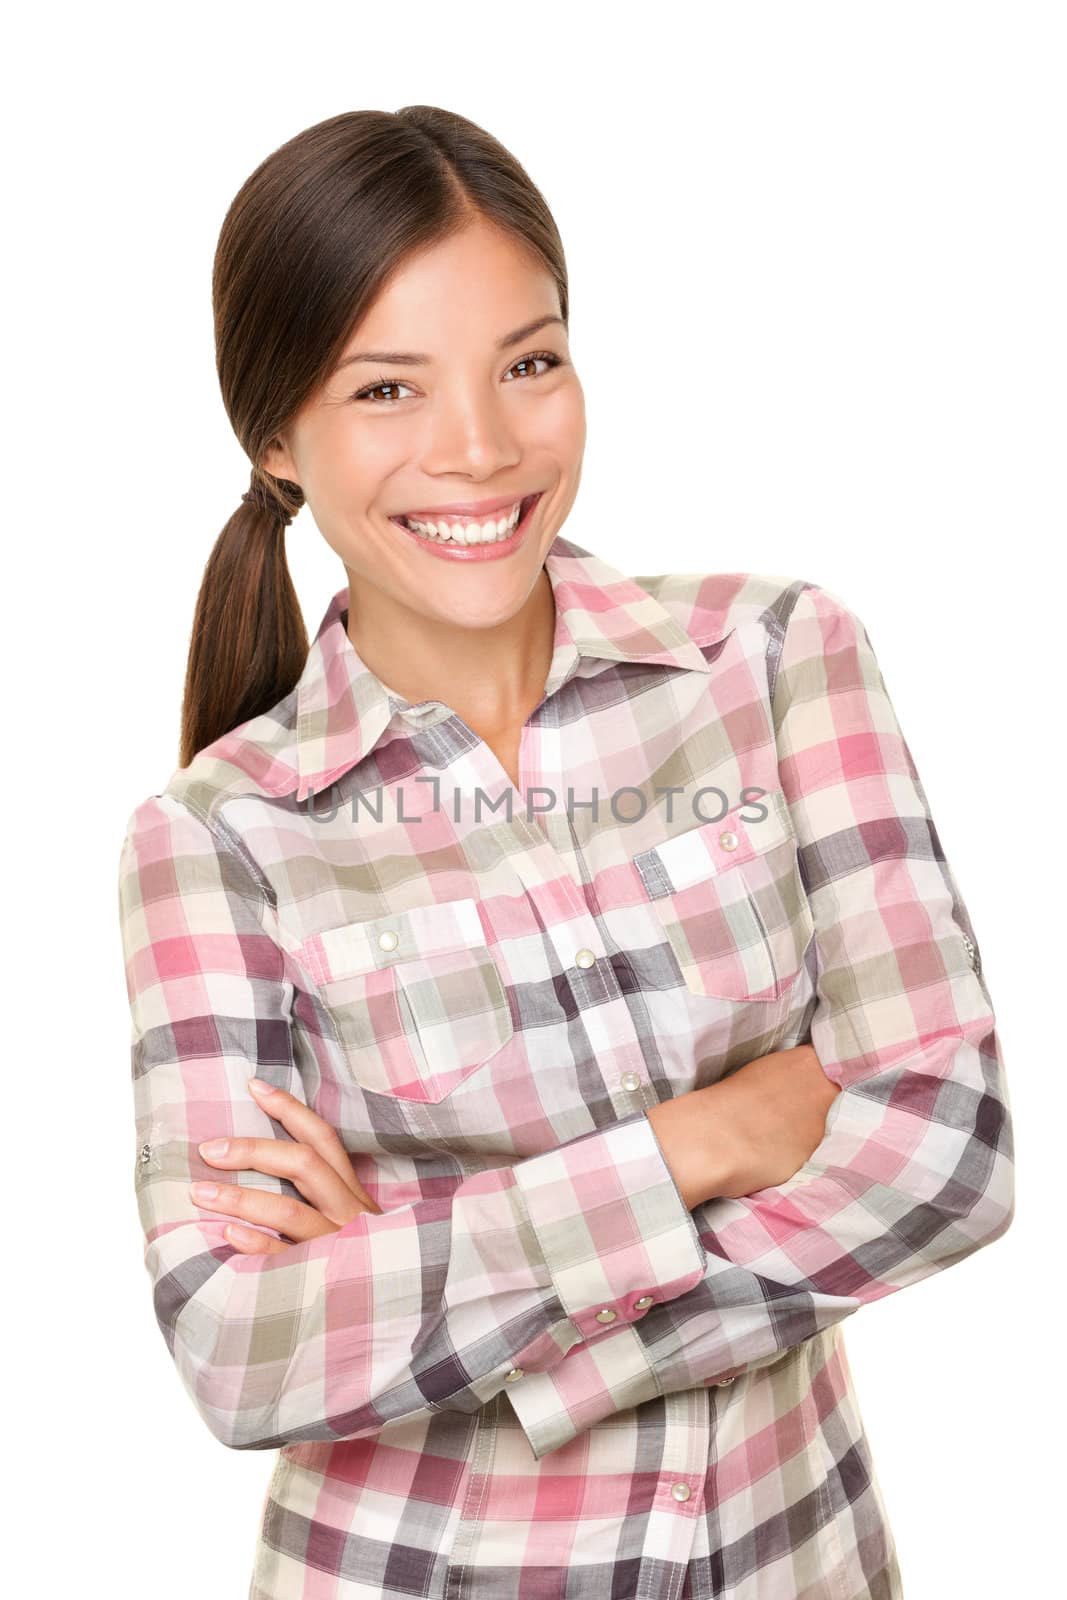 Smiling woman in plaid shirt by Maridav